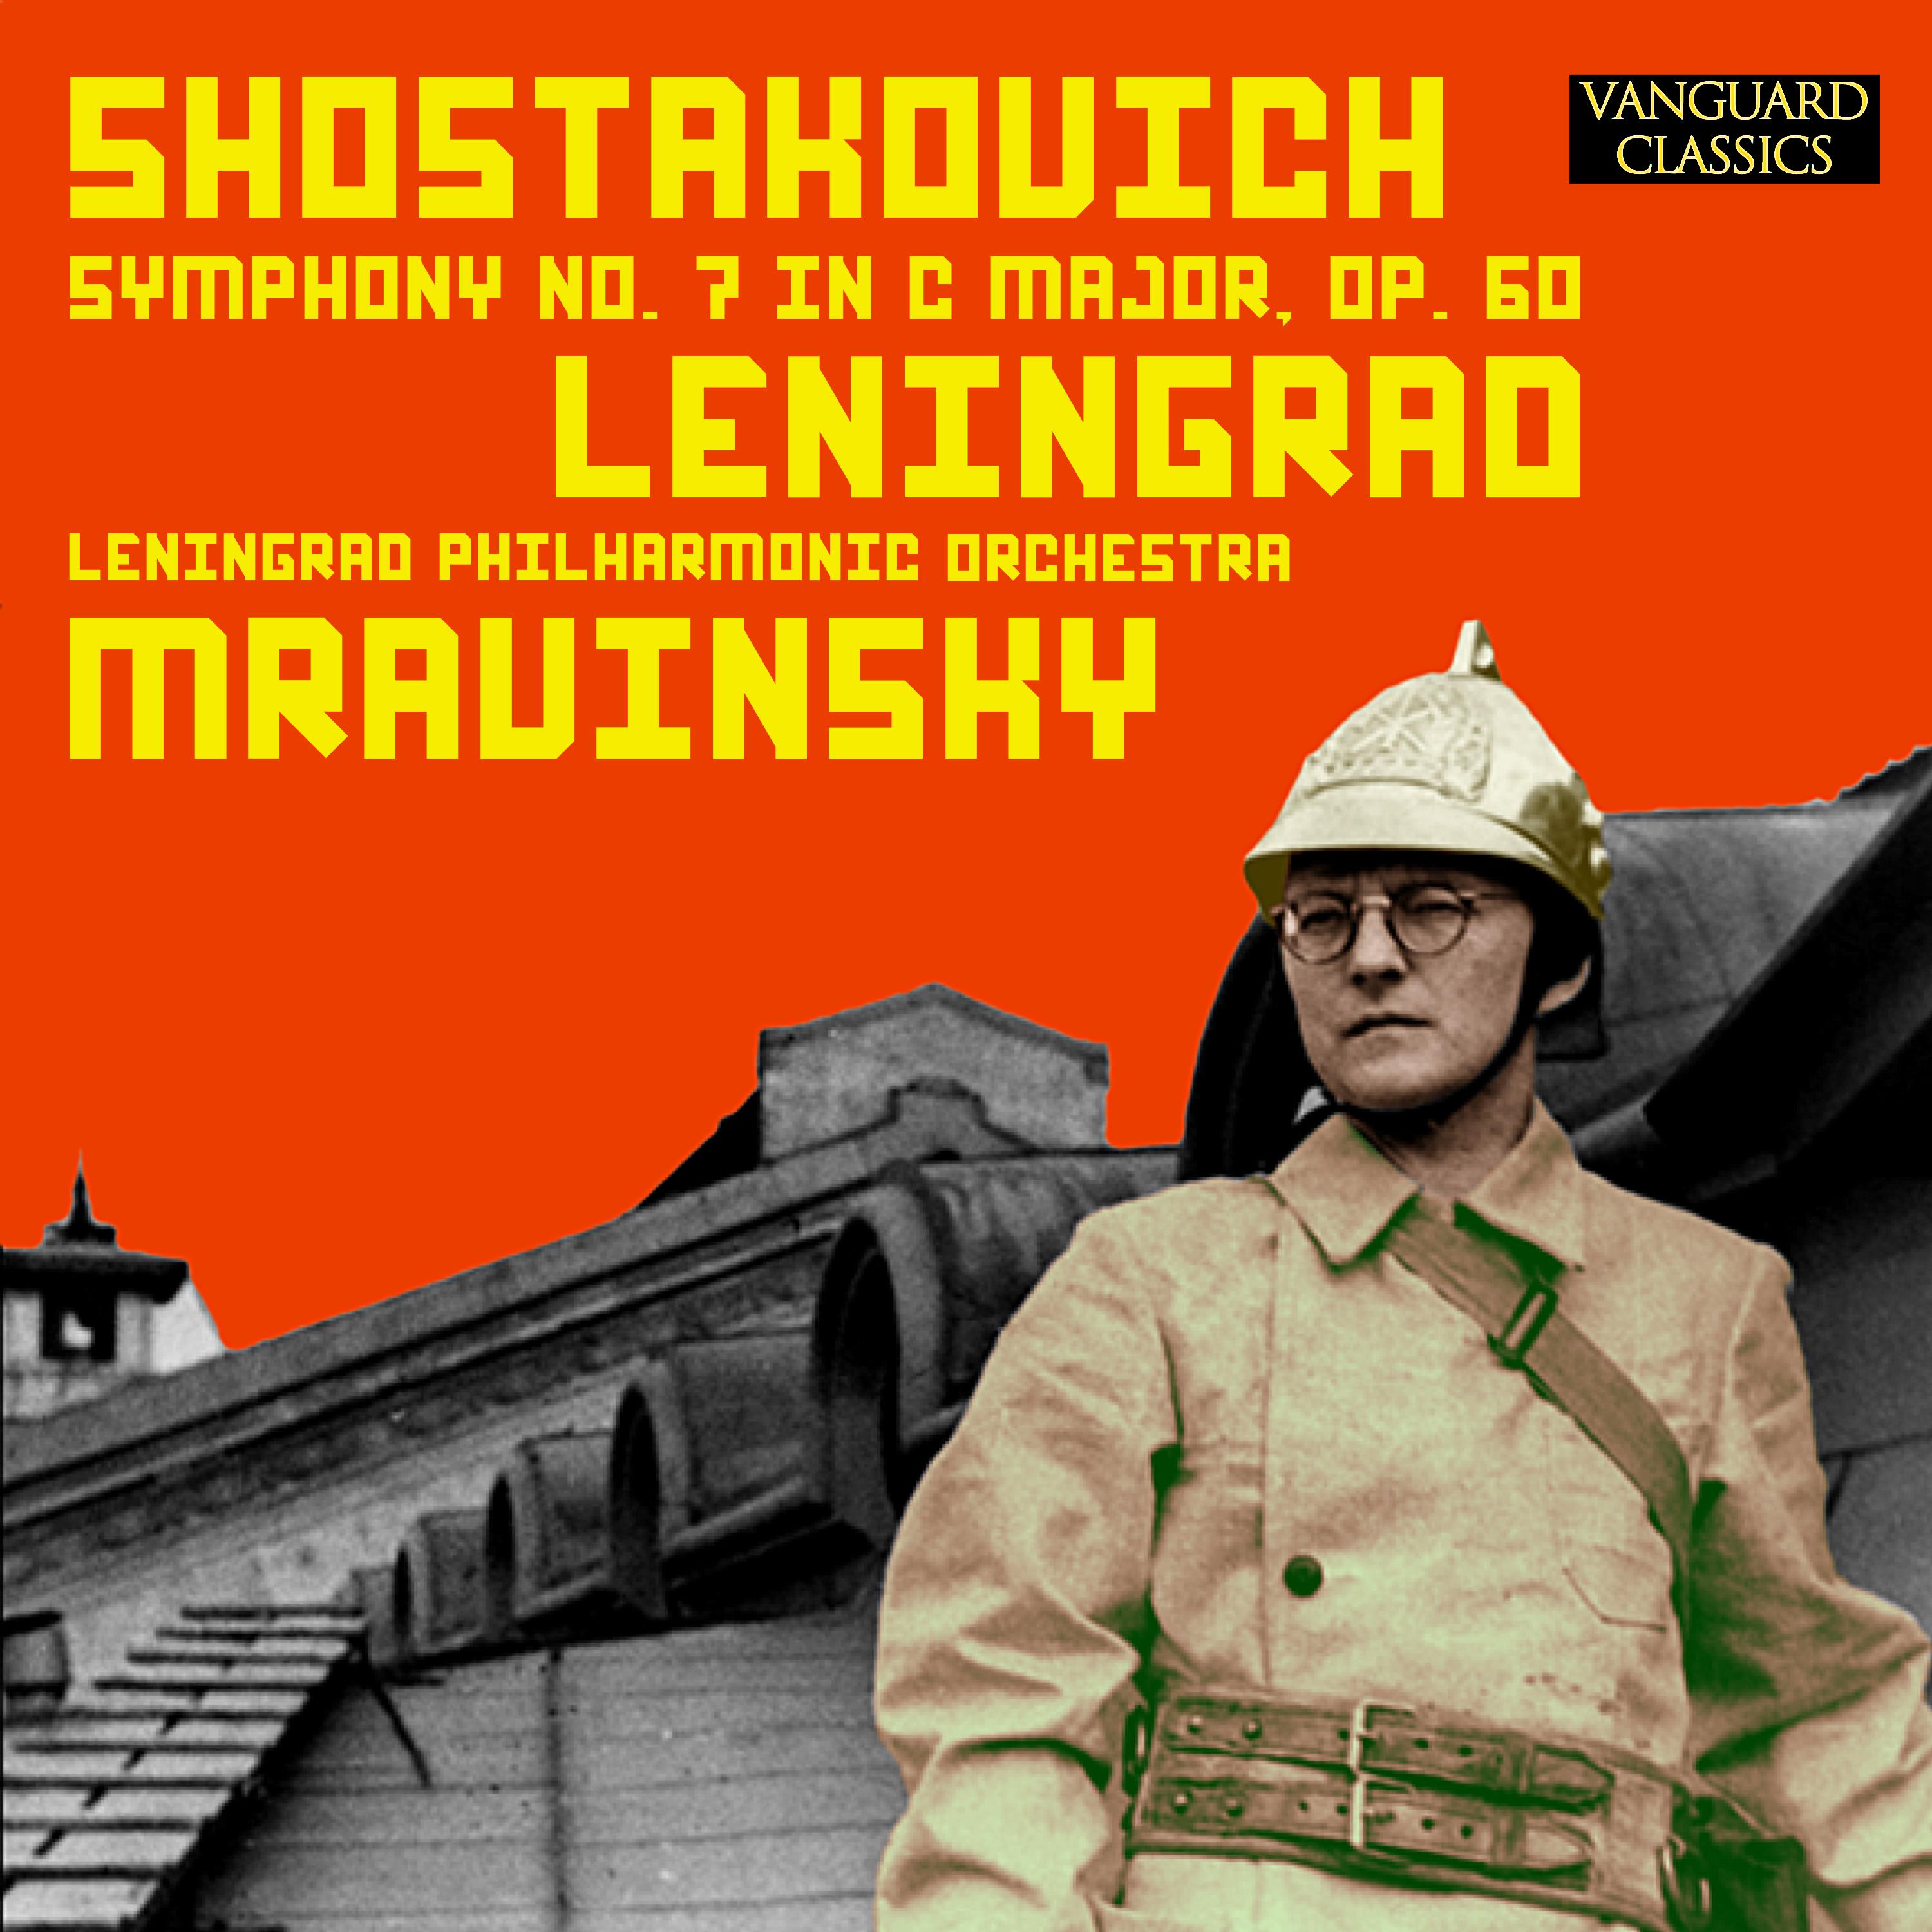 Shostakovich: Symphony No. 7 in C Major "Leningrad", Op. 60